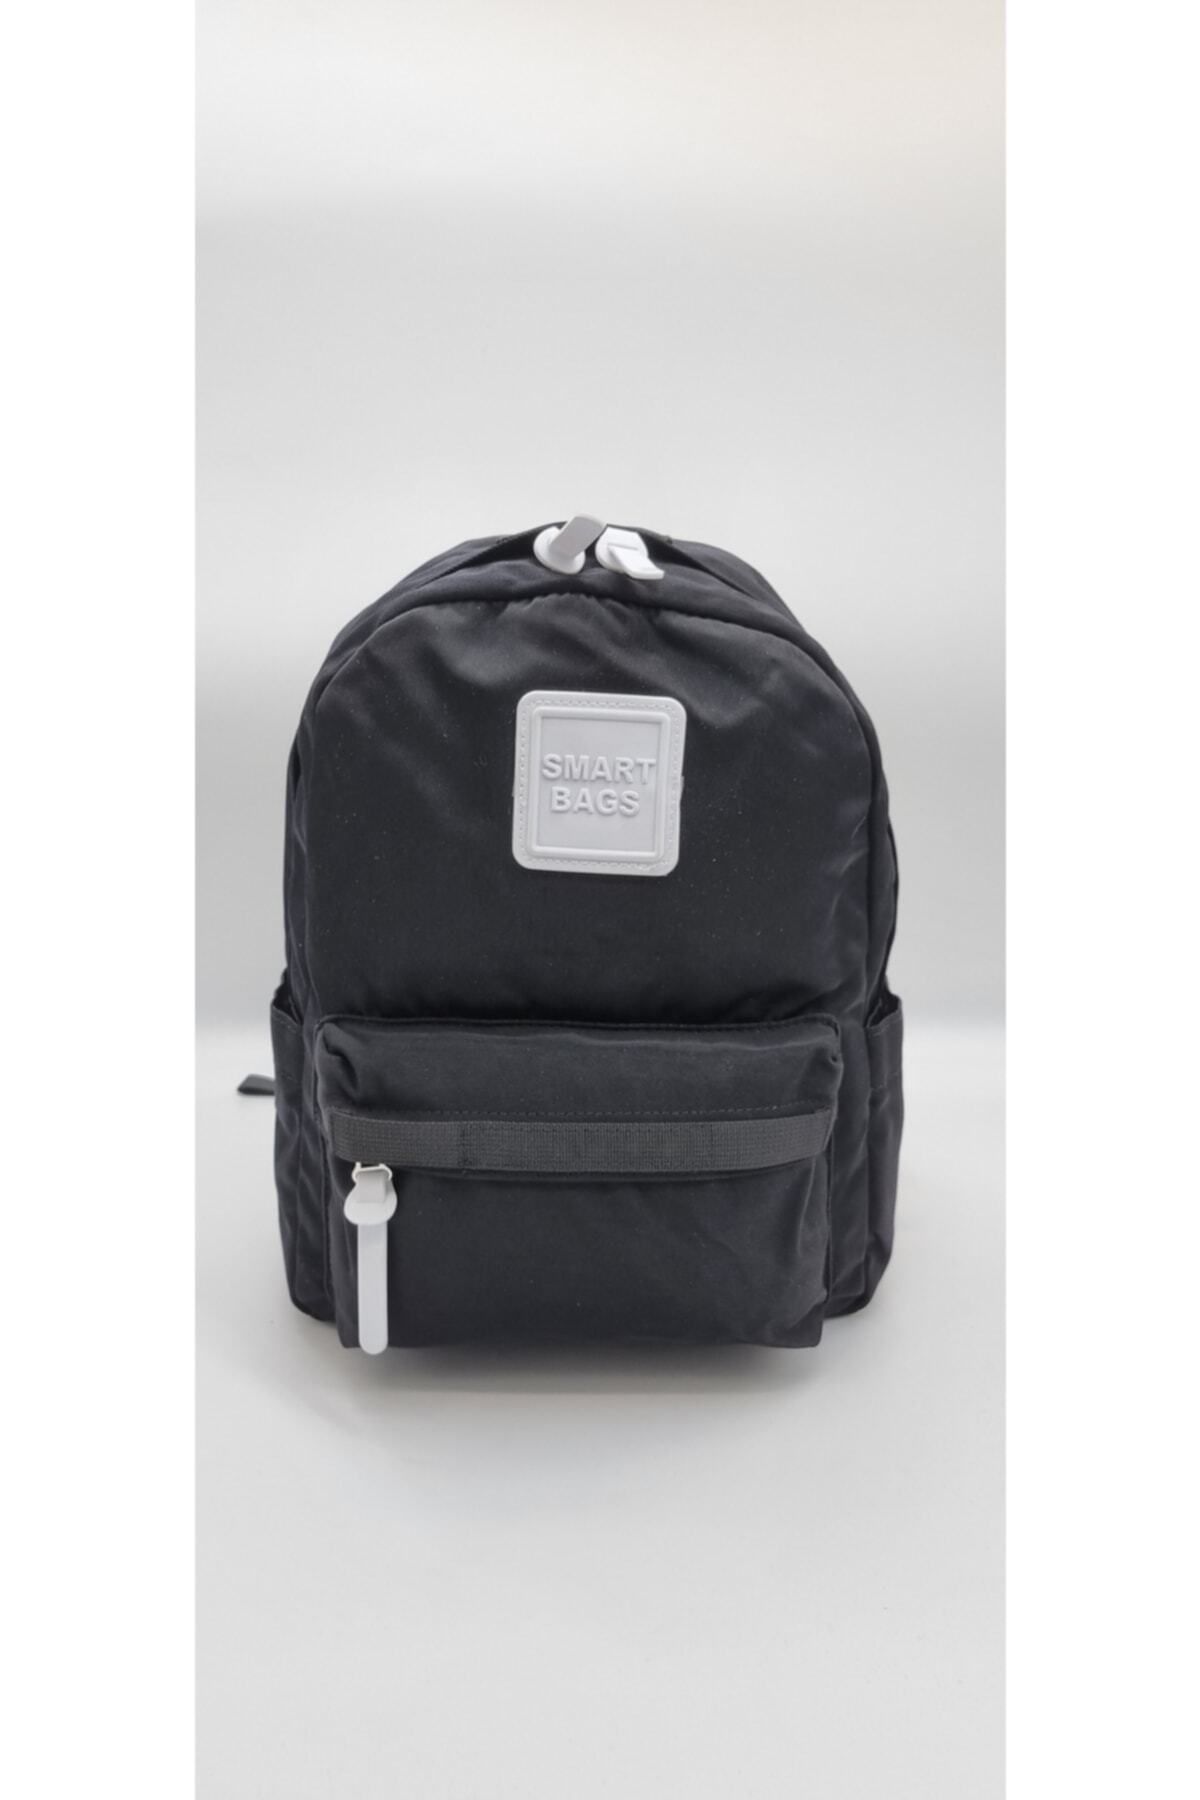 21K Smart Bags Smart Bags Unisex Siyah Sırt Çantası 6010